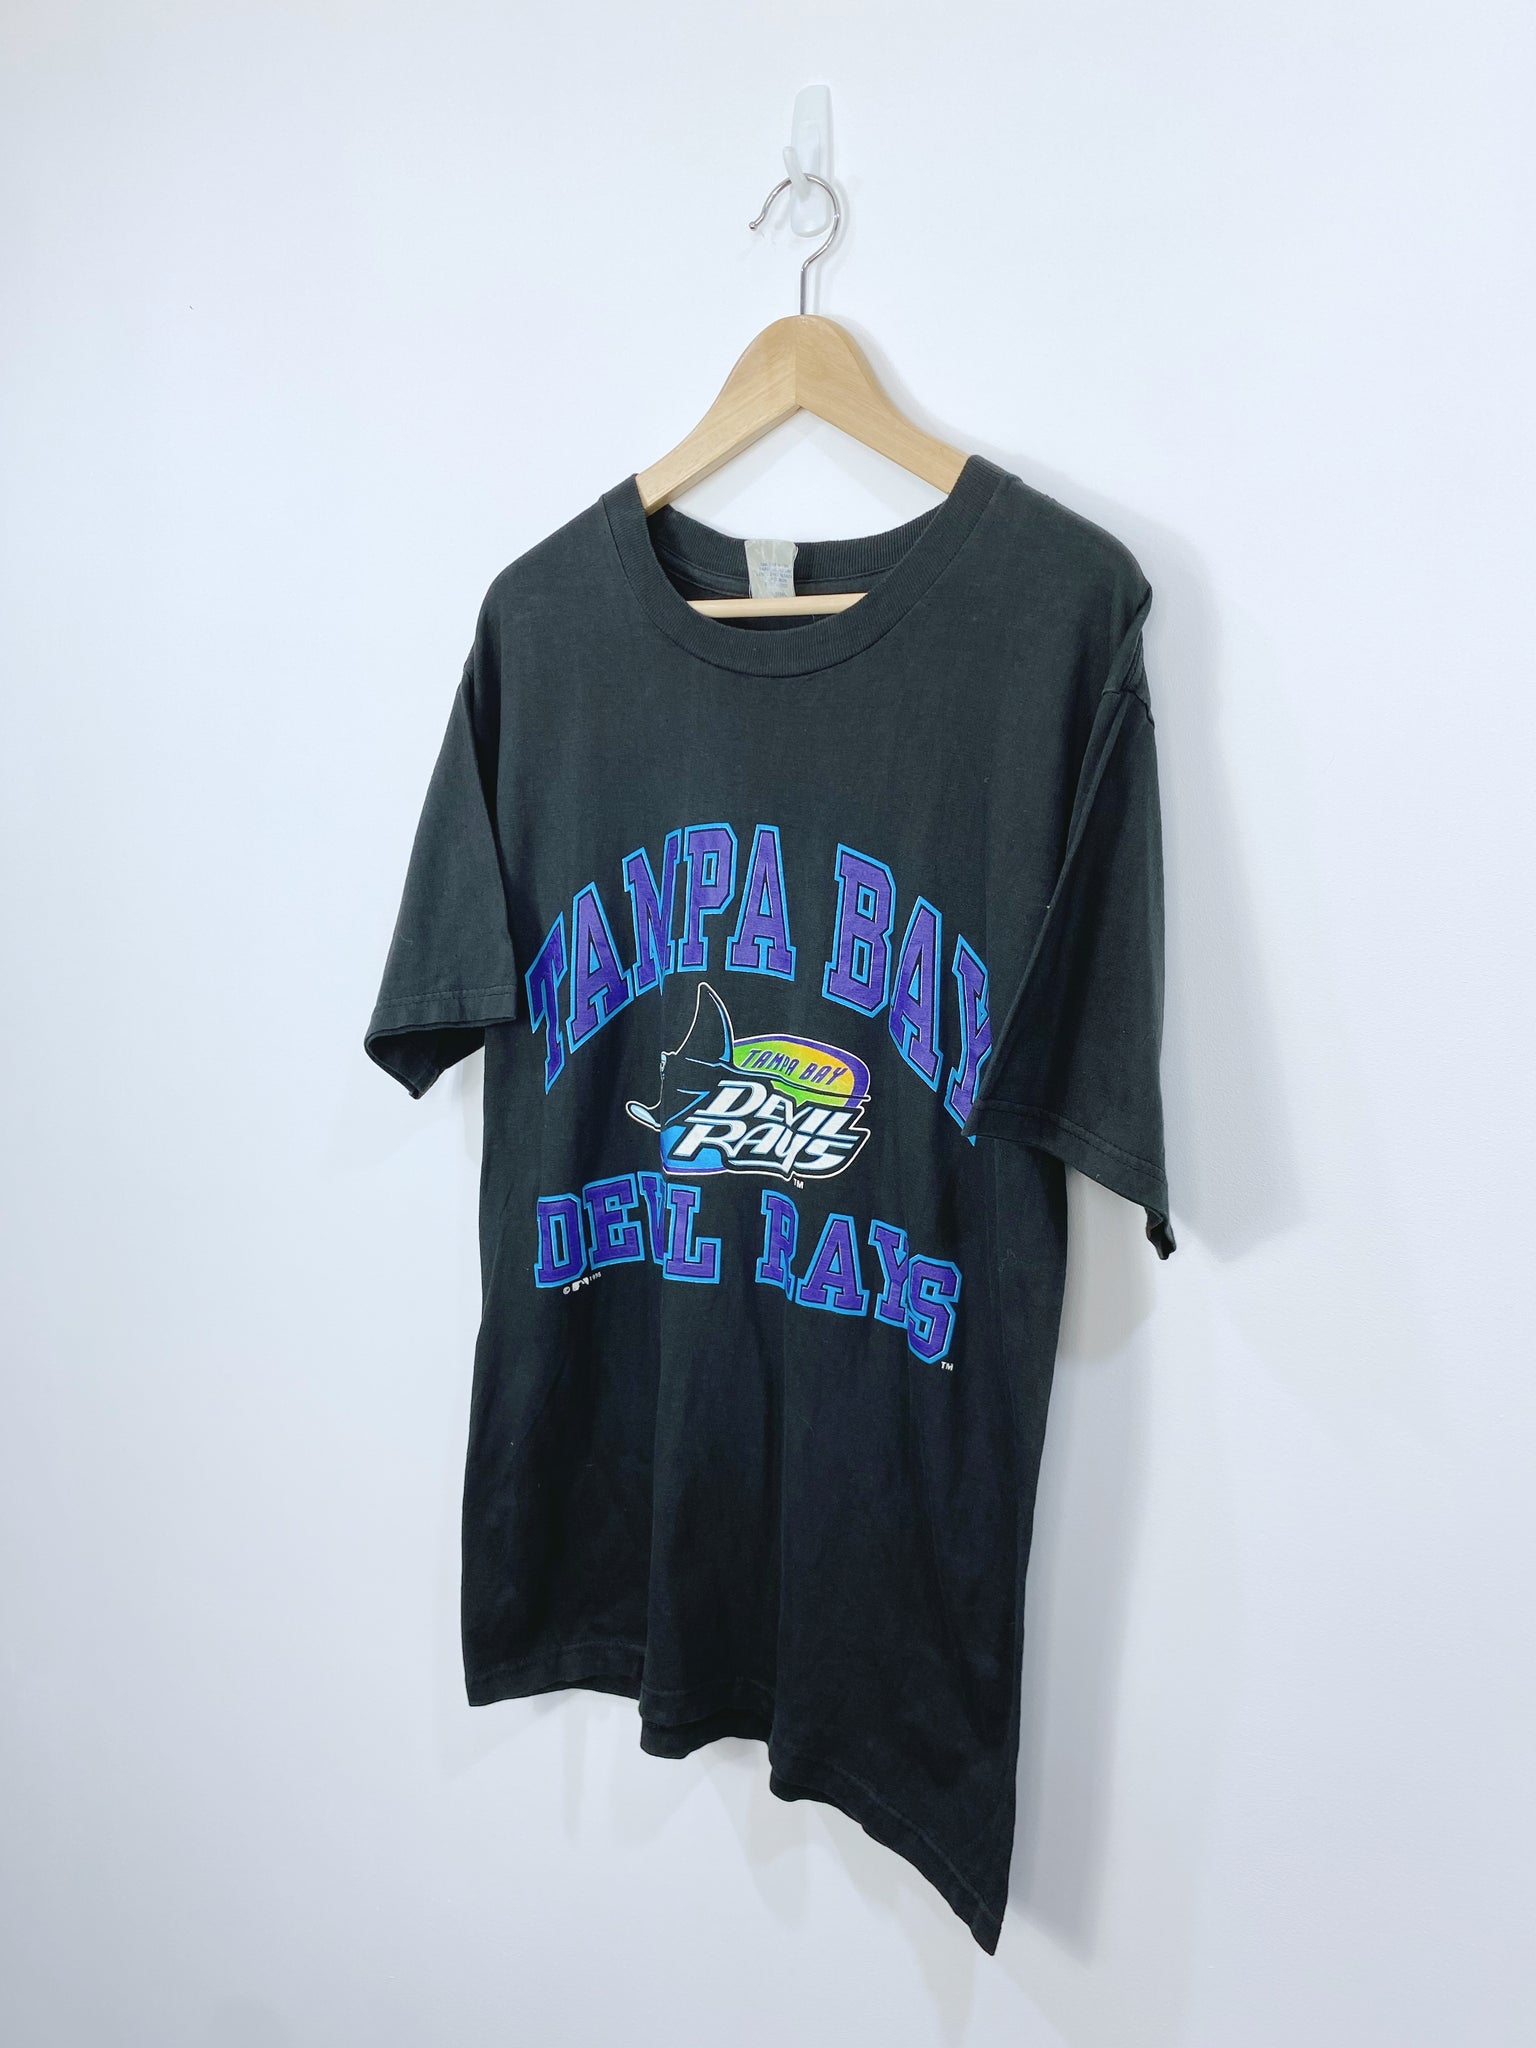 Vintage 1995 Tampa Bay Devil Rays T-shirt M